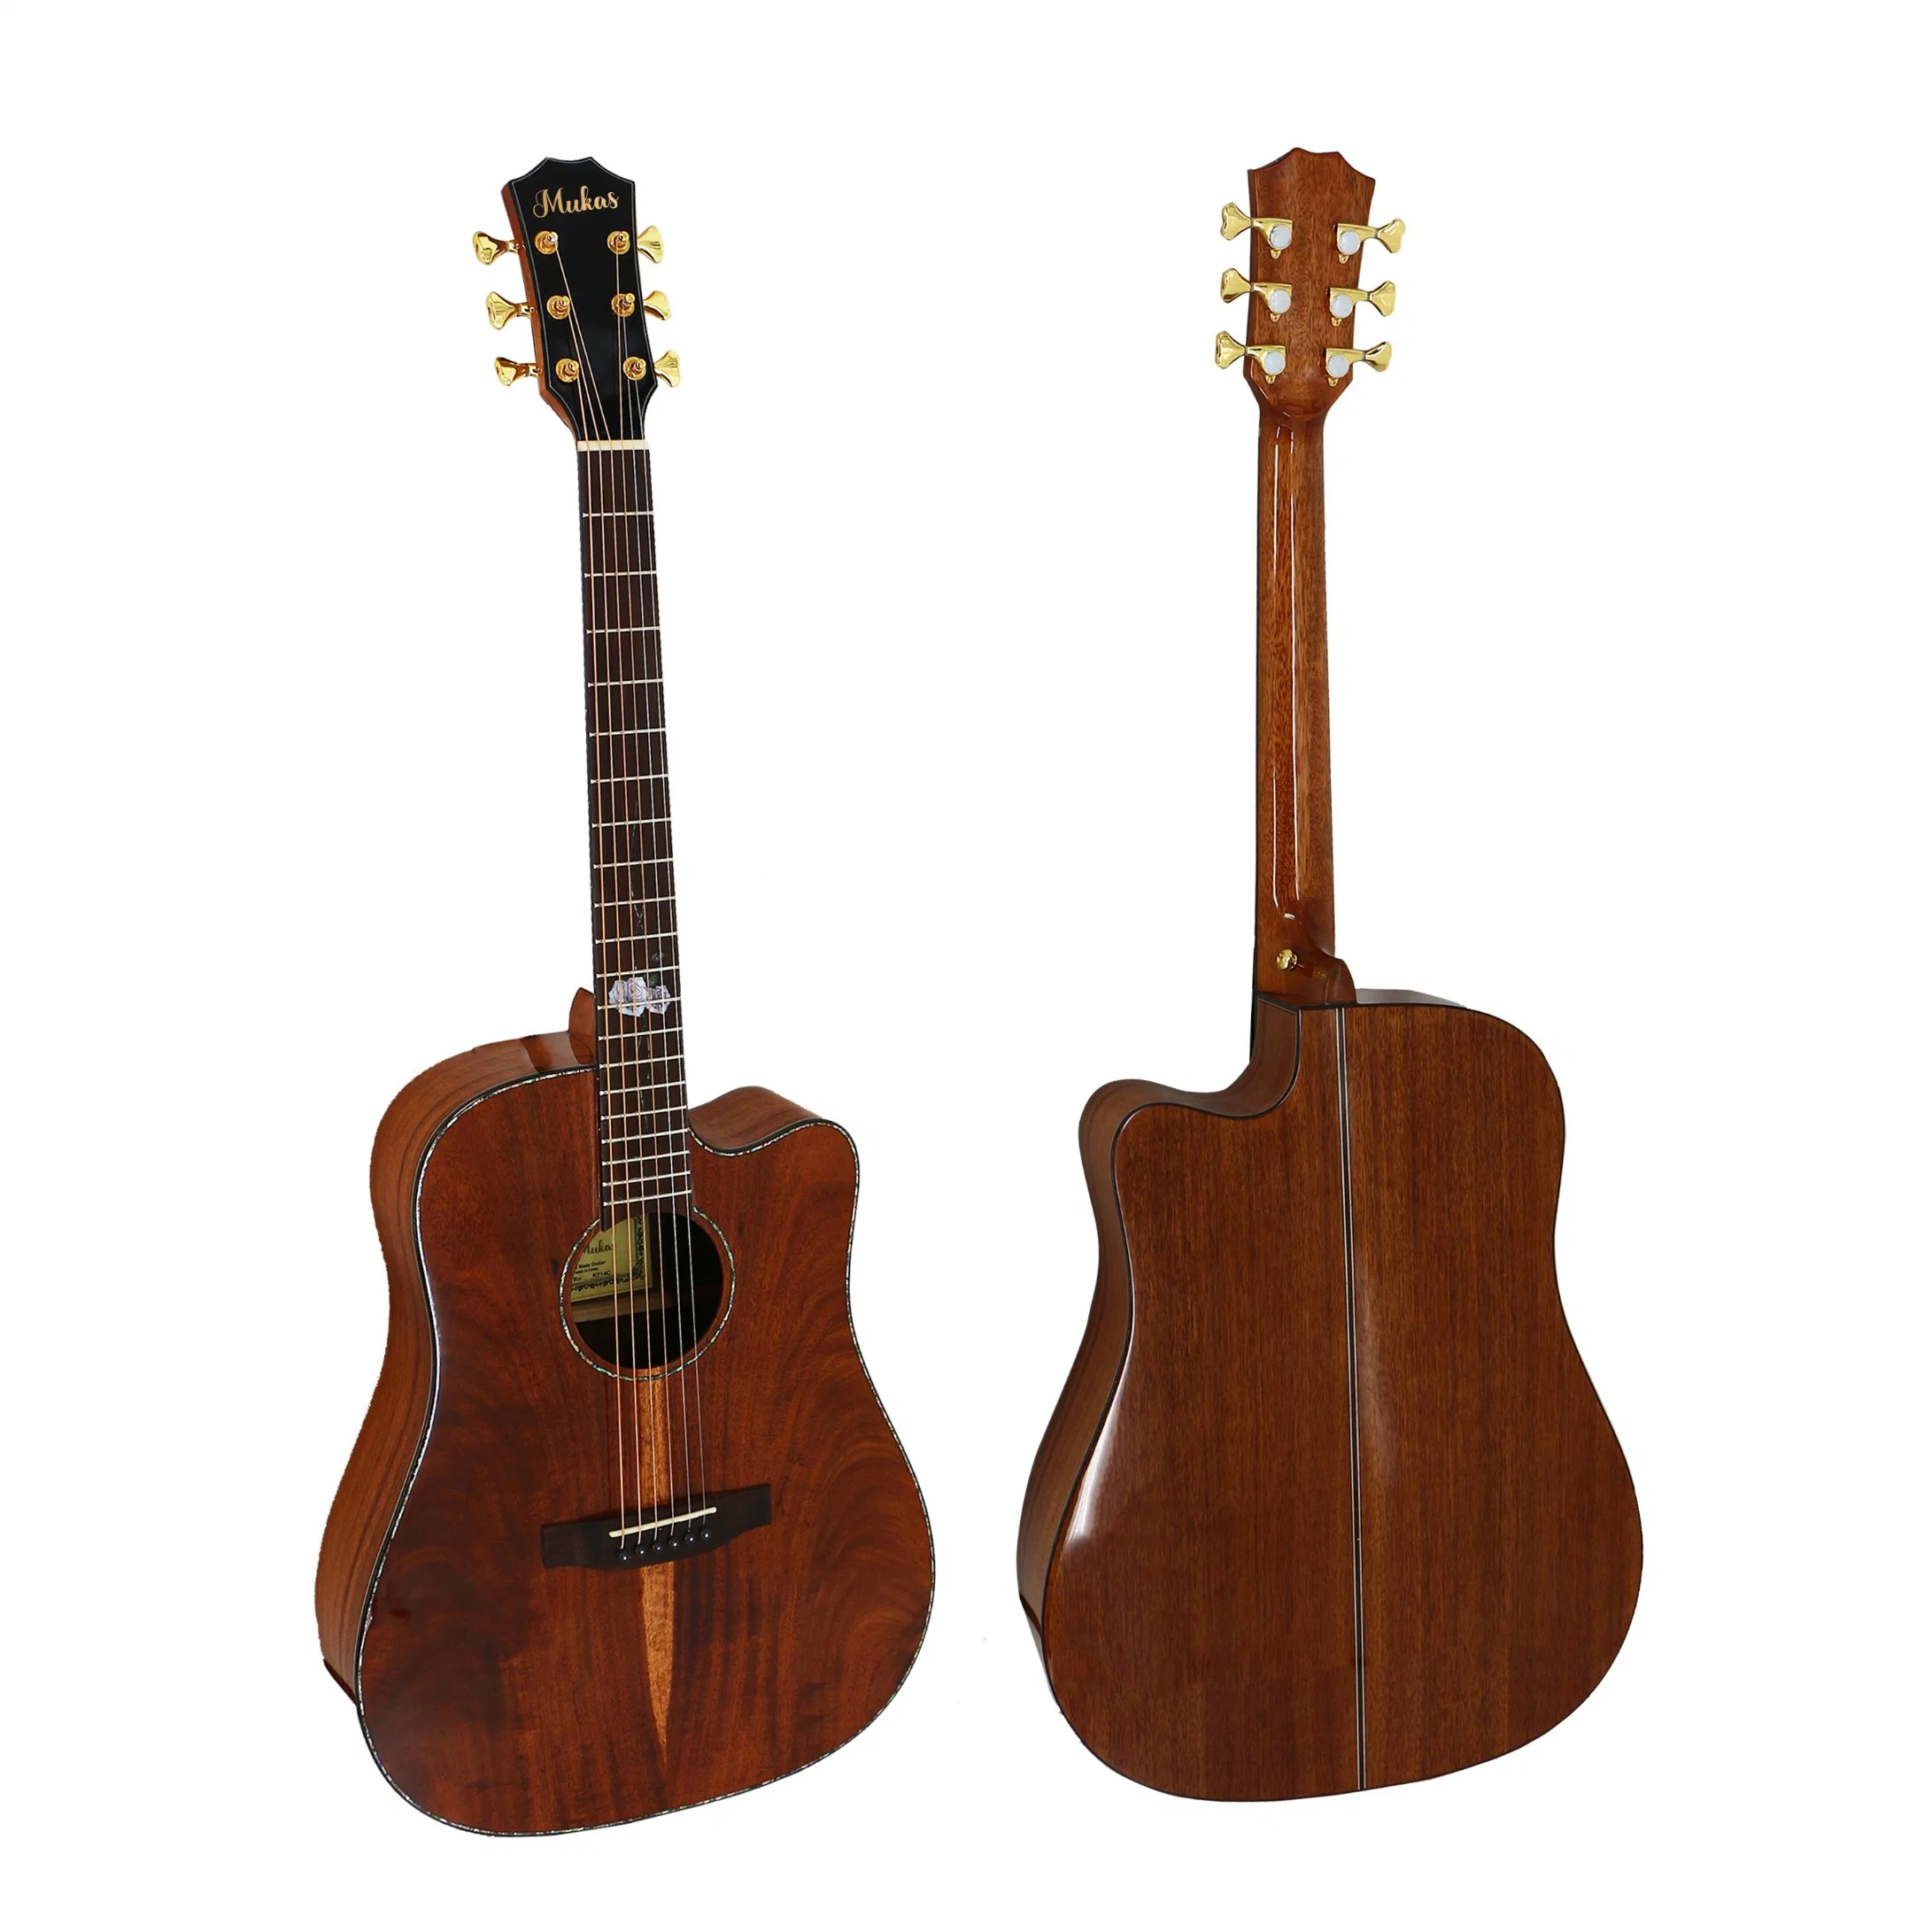 Hot Selling Musical Instruments Handmade Electric Guitar, Classical Guitar Acoustic Guitar Made in China, Guitar